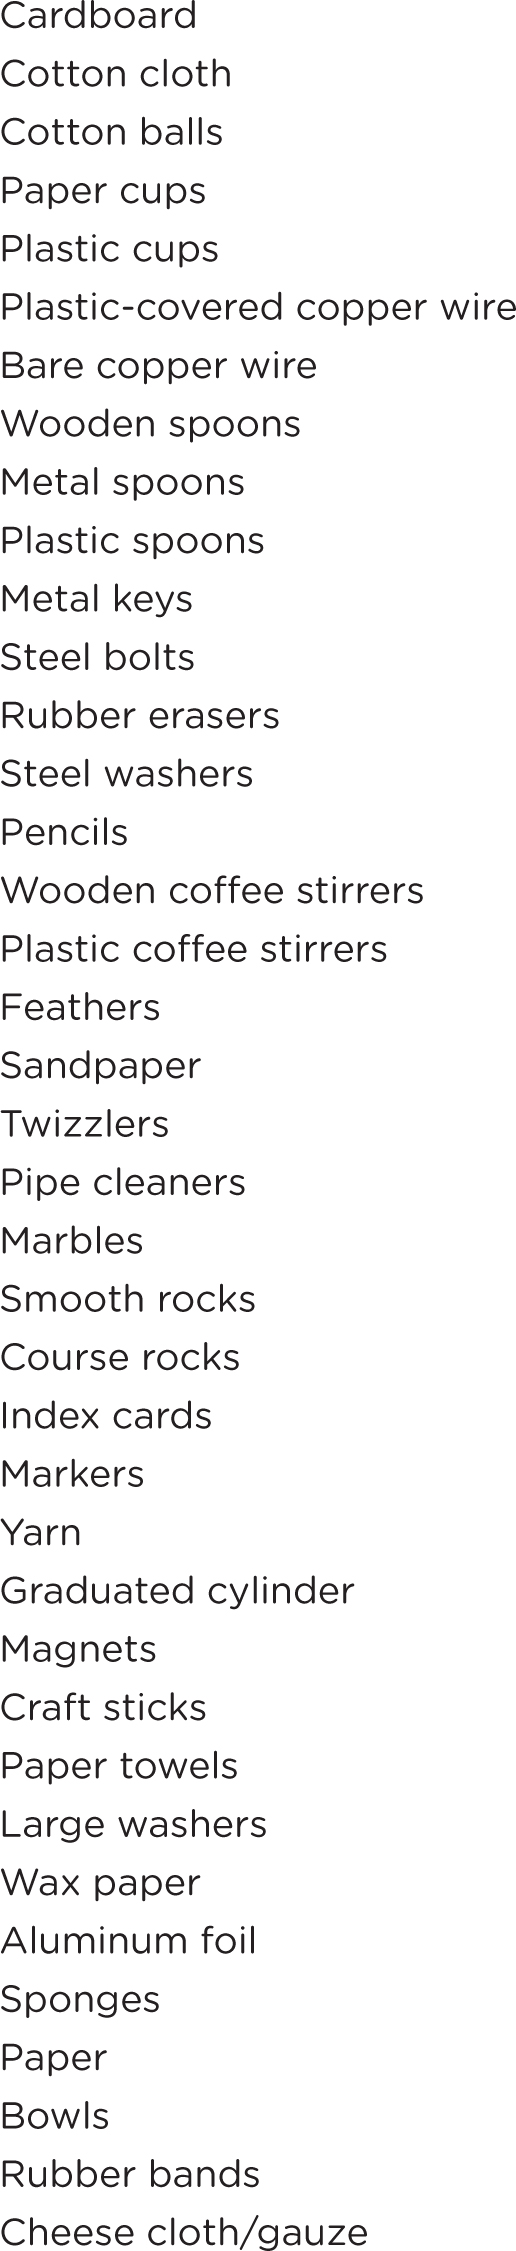 List of materials.